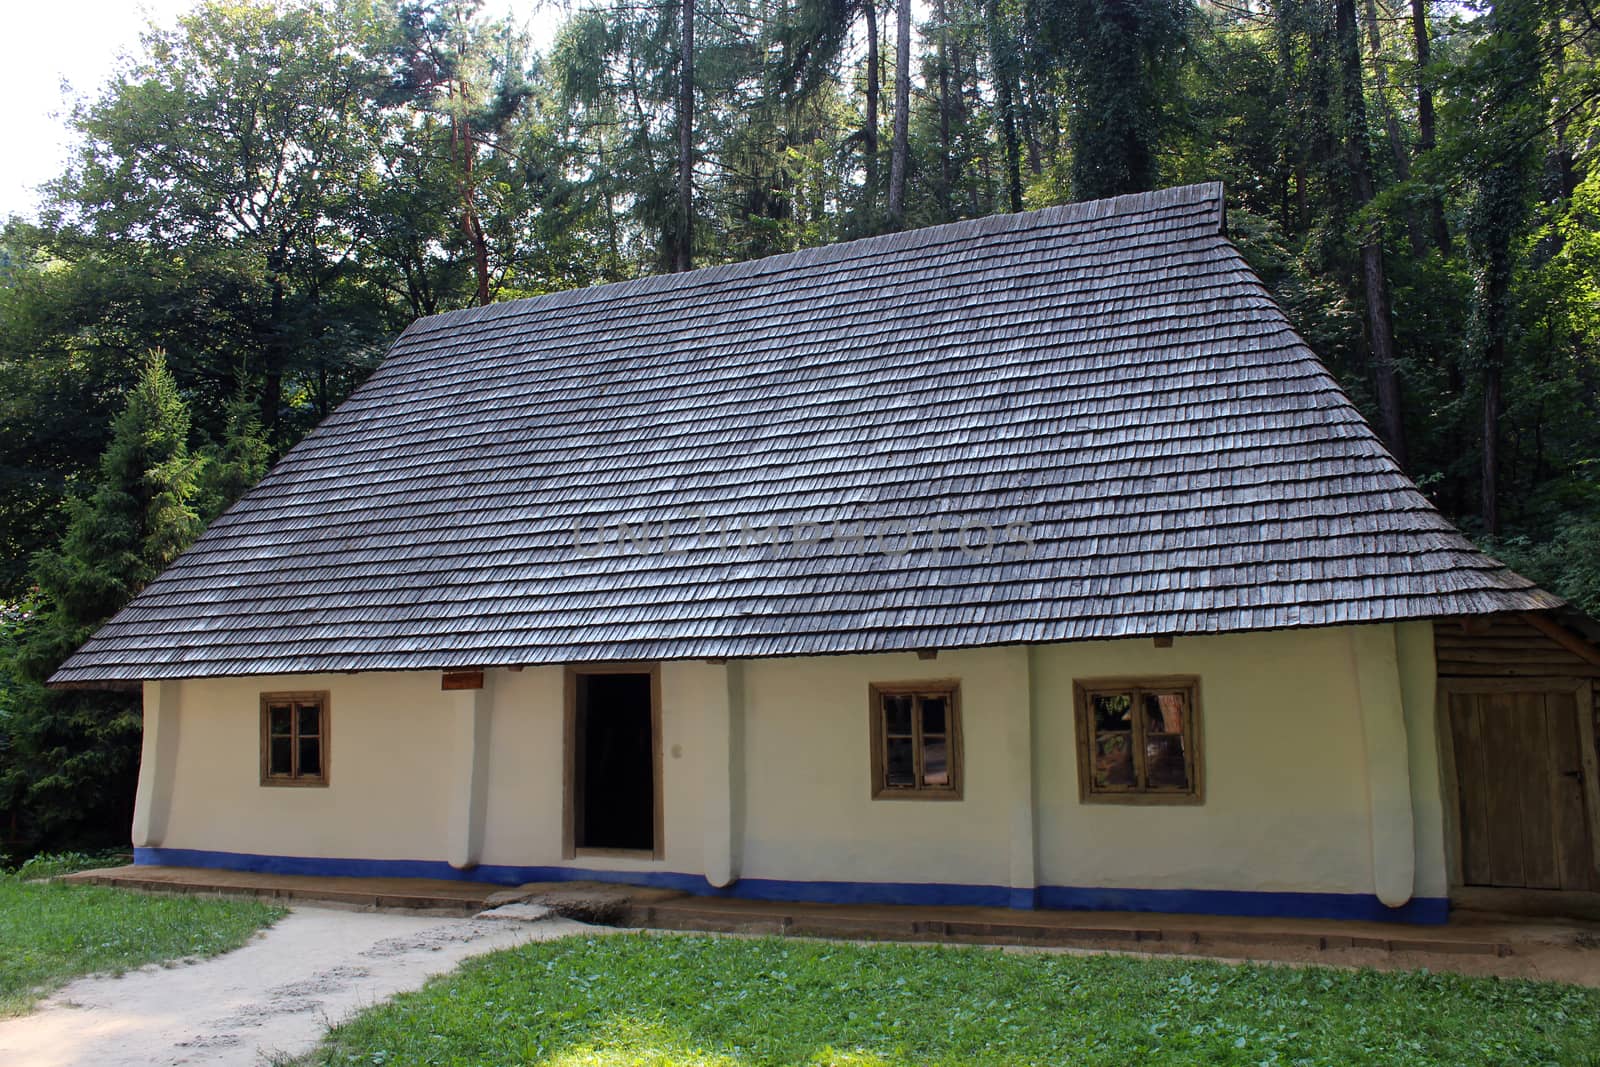 old rural house in Carpathian region by alexmak